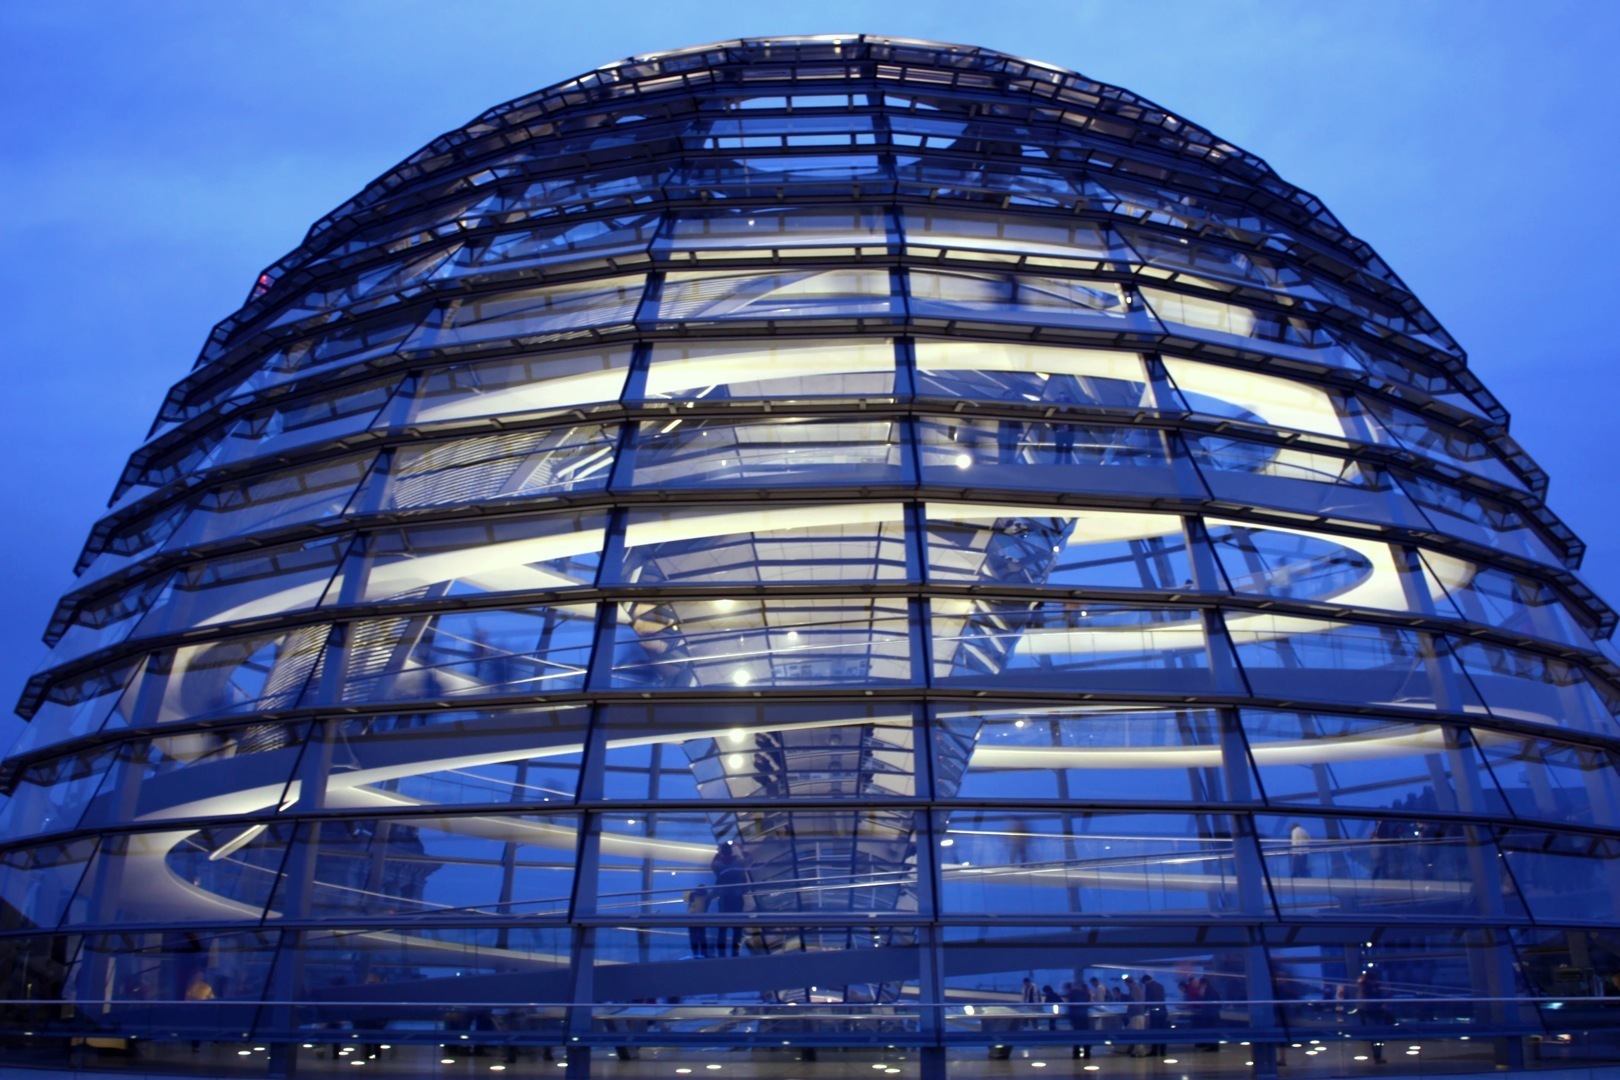 Dome of the Reichstag building - La cúpula del Reichstag - Reichstagskuppel Berlin